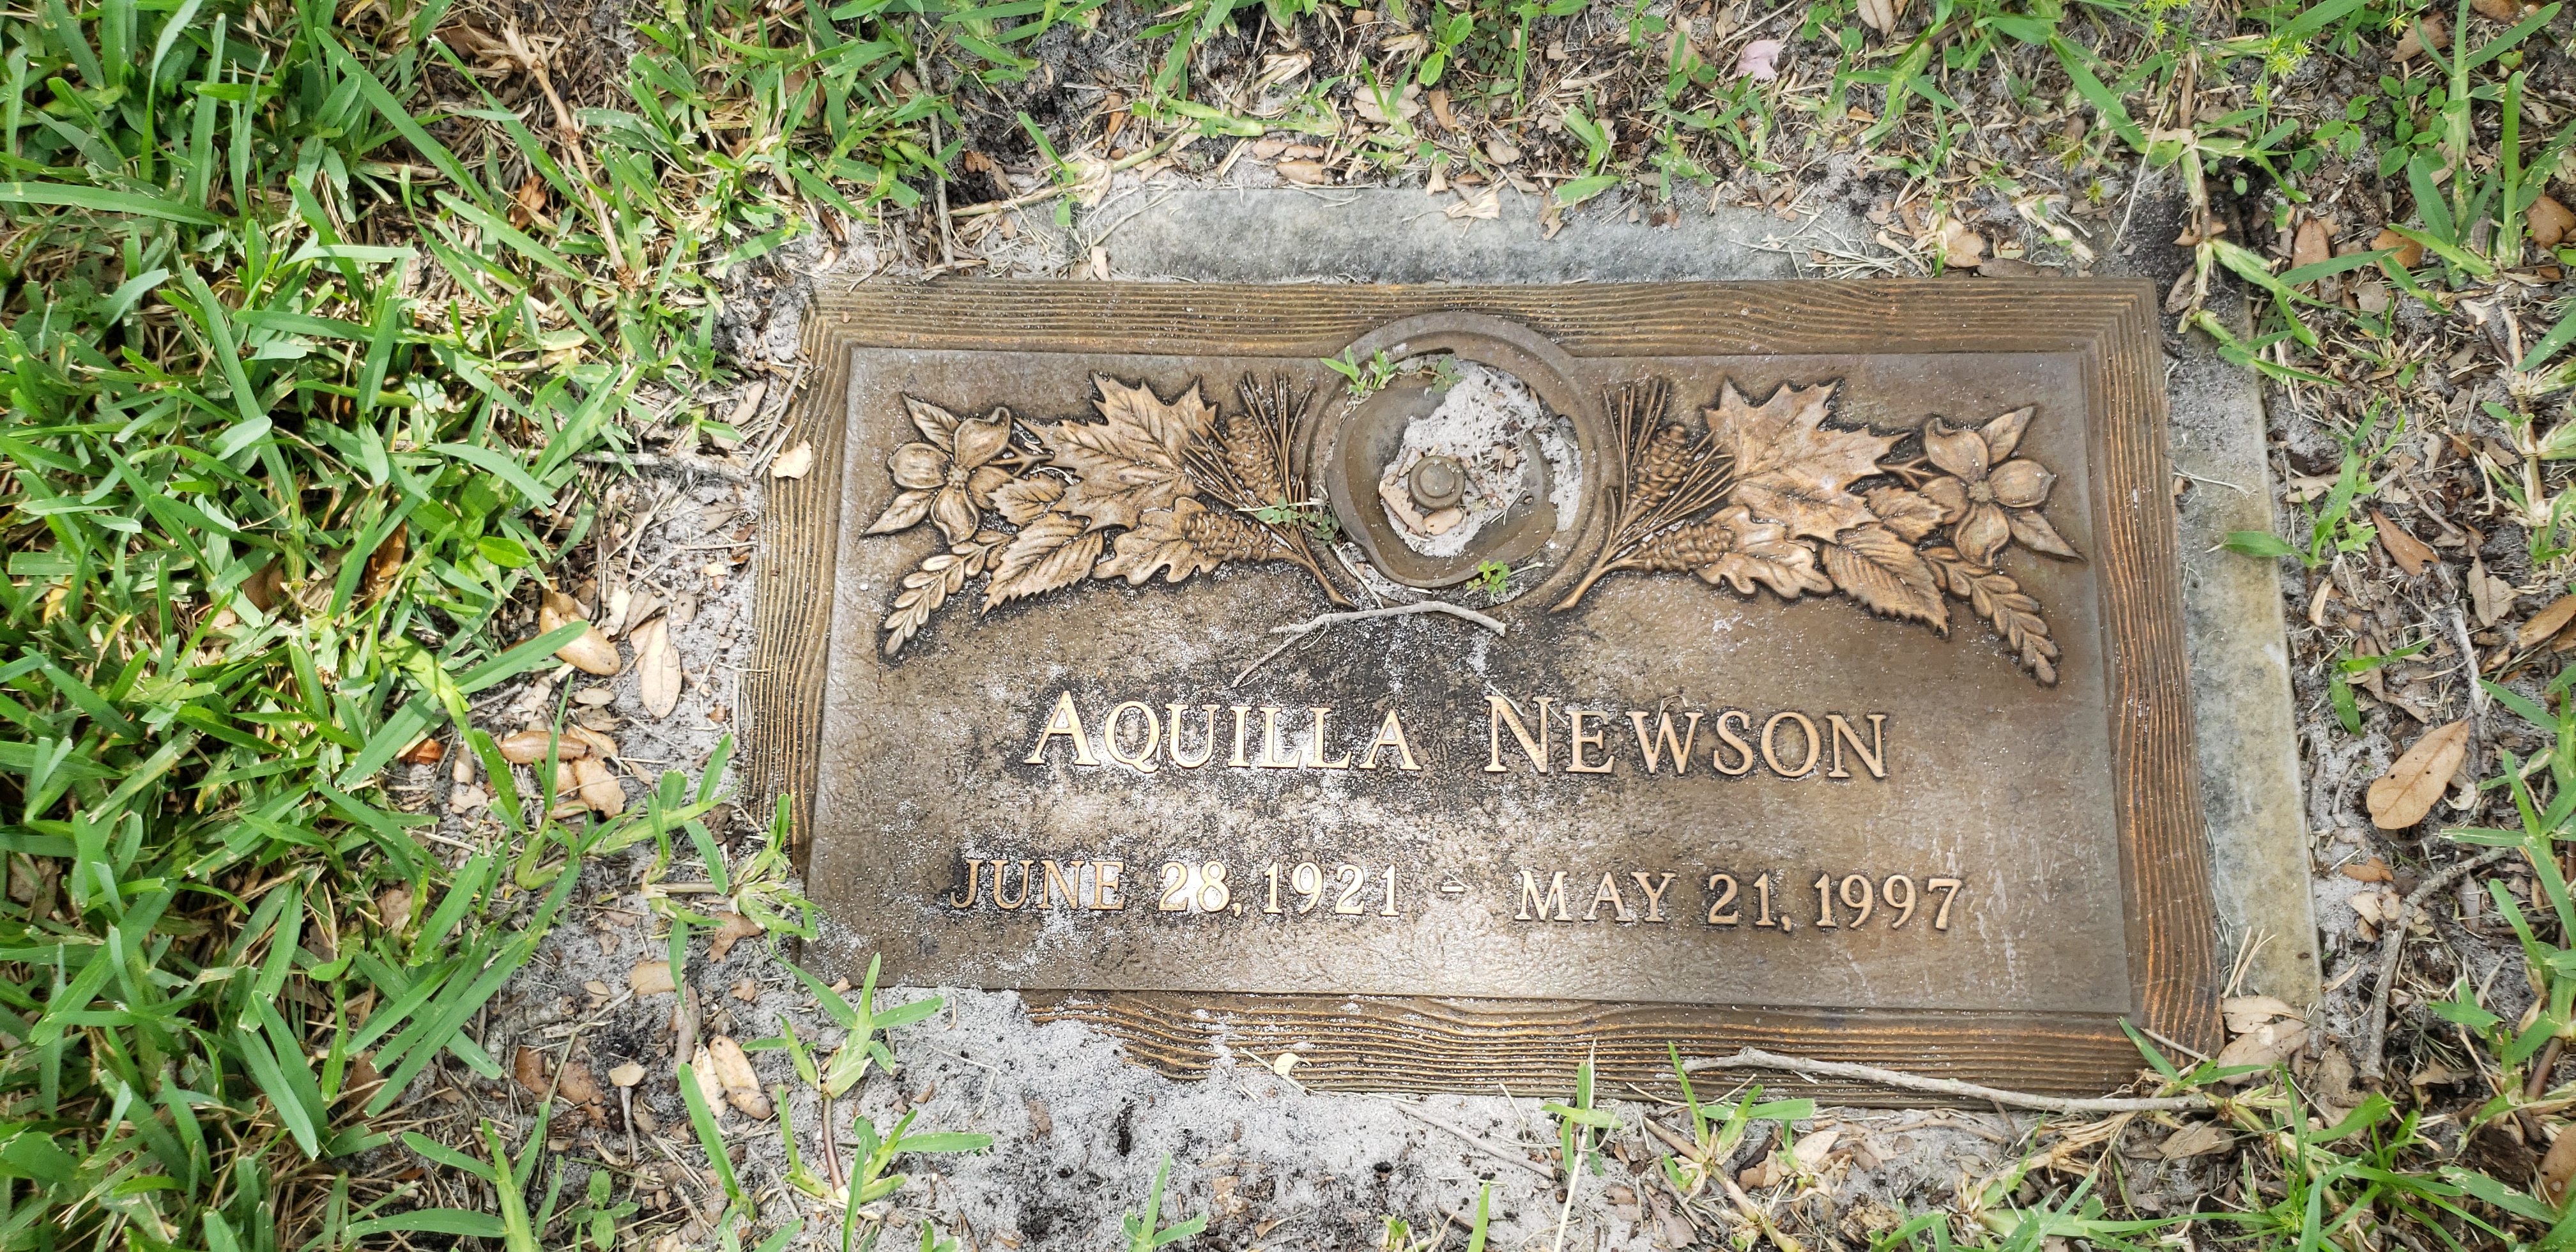 Aquilla Newson